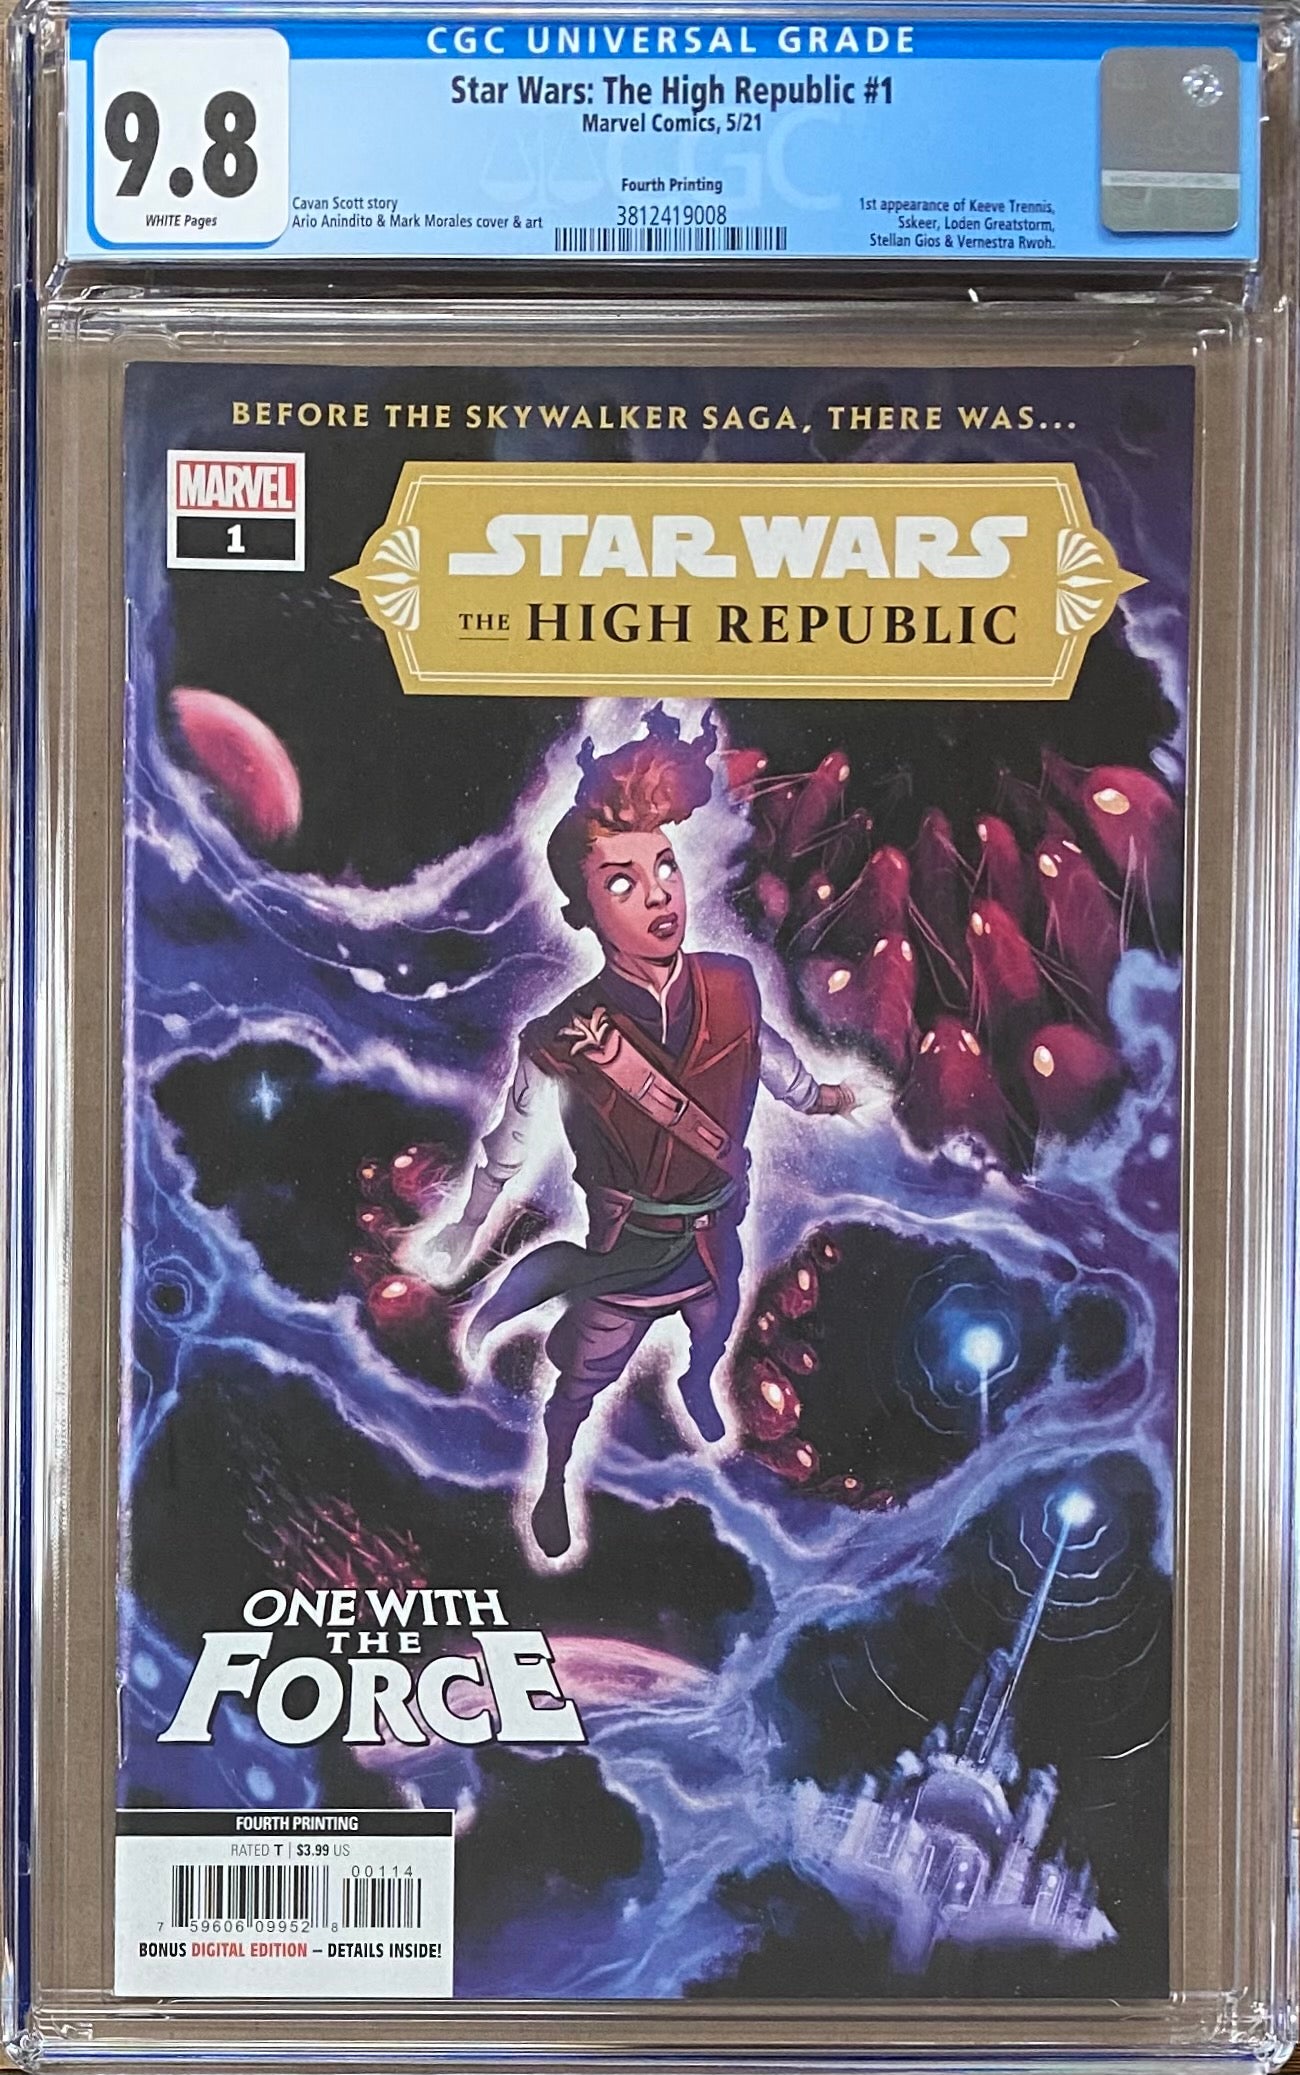 Star Wars: The High Republic #1 Fourth Printing CGC 9.8